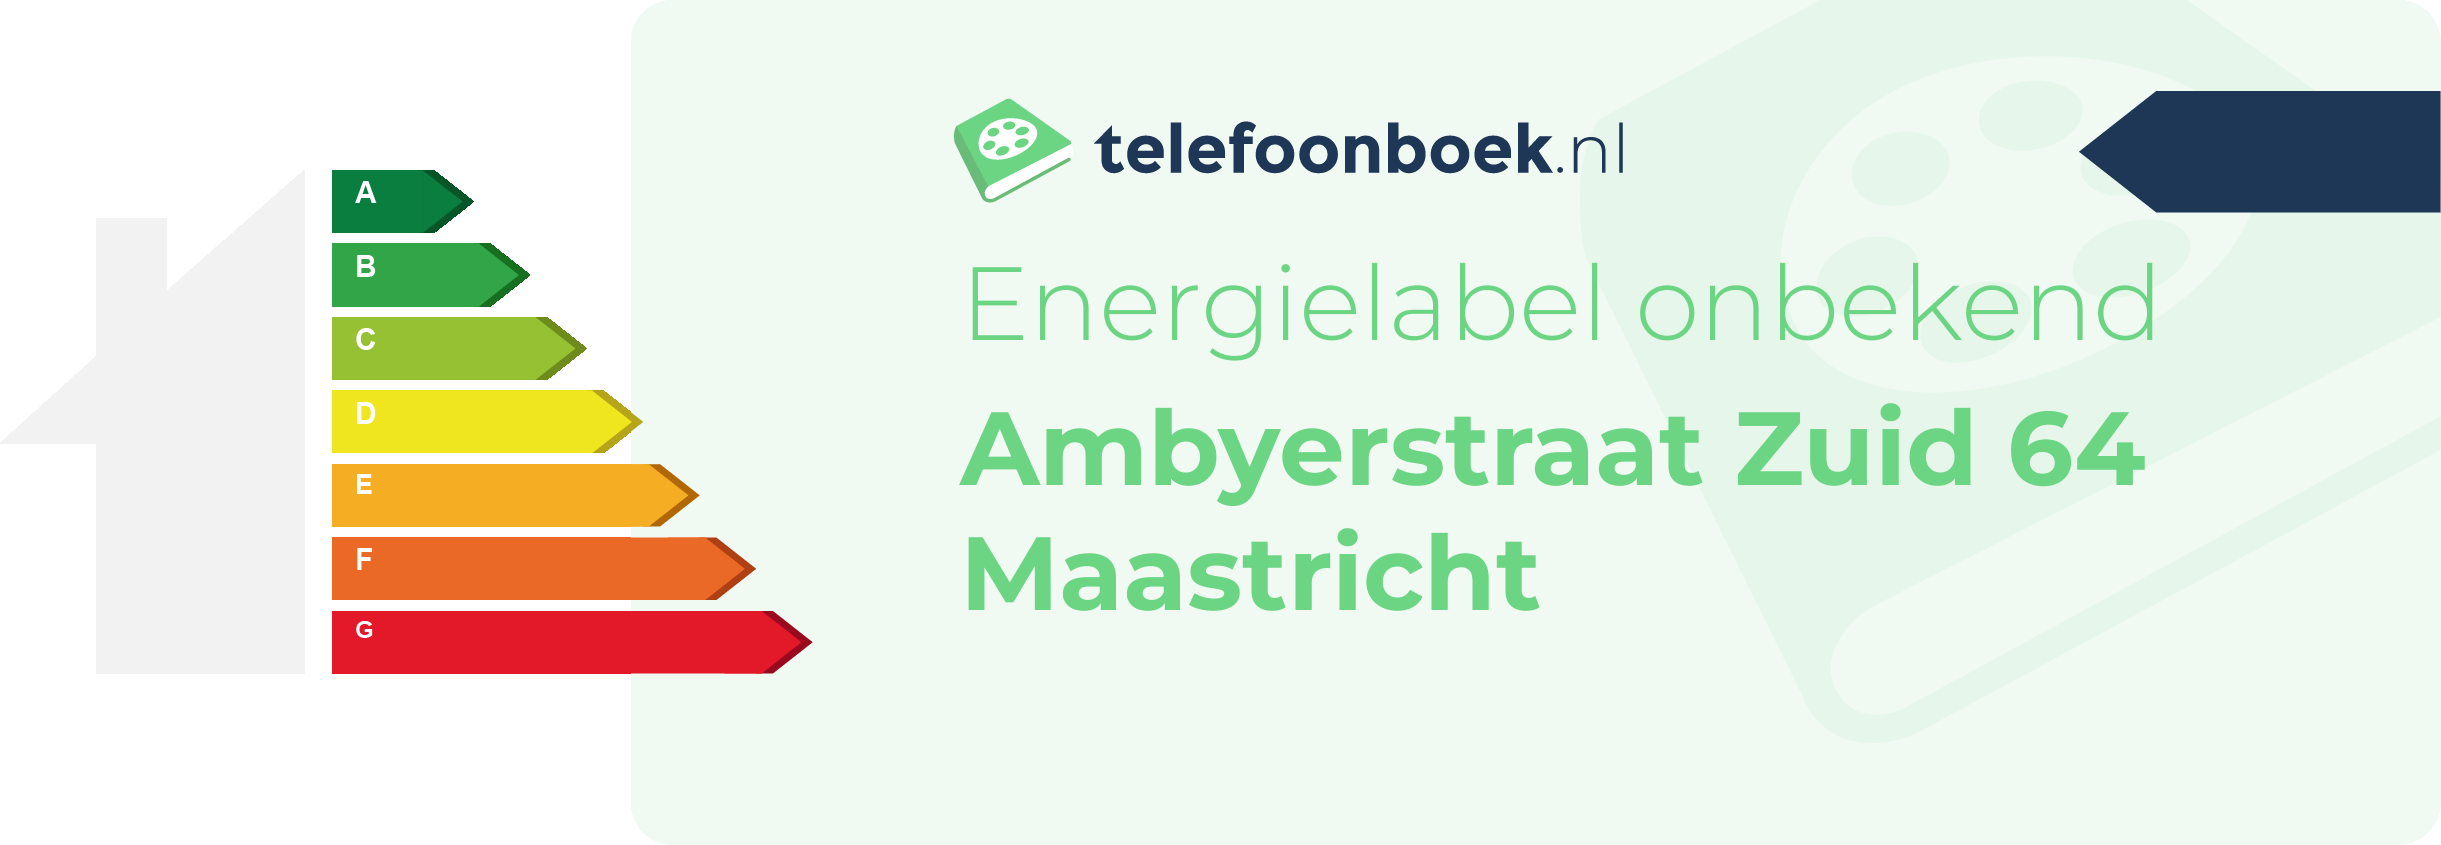 Energielabel Ambyerstraat Zuid 64 Maastricht